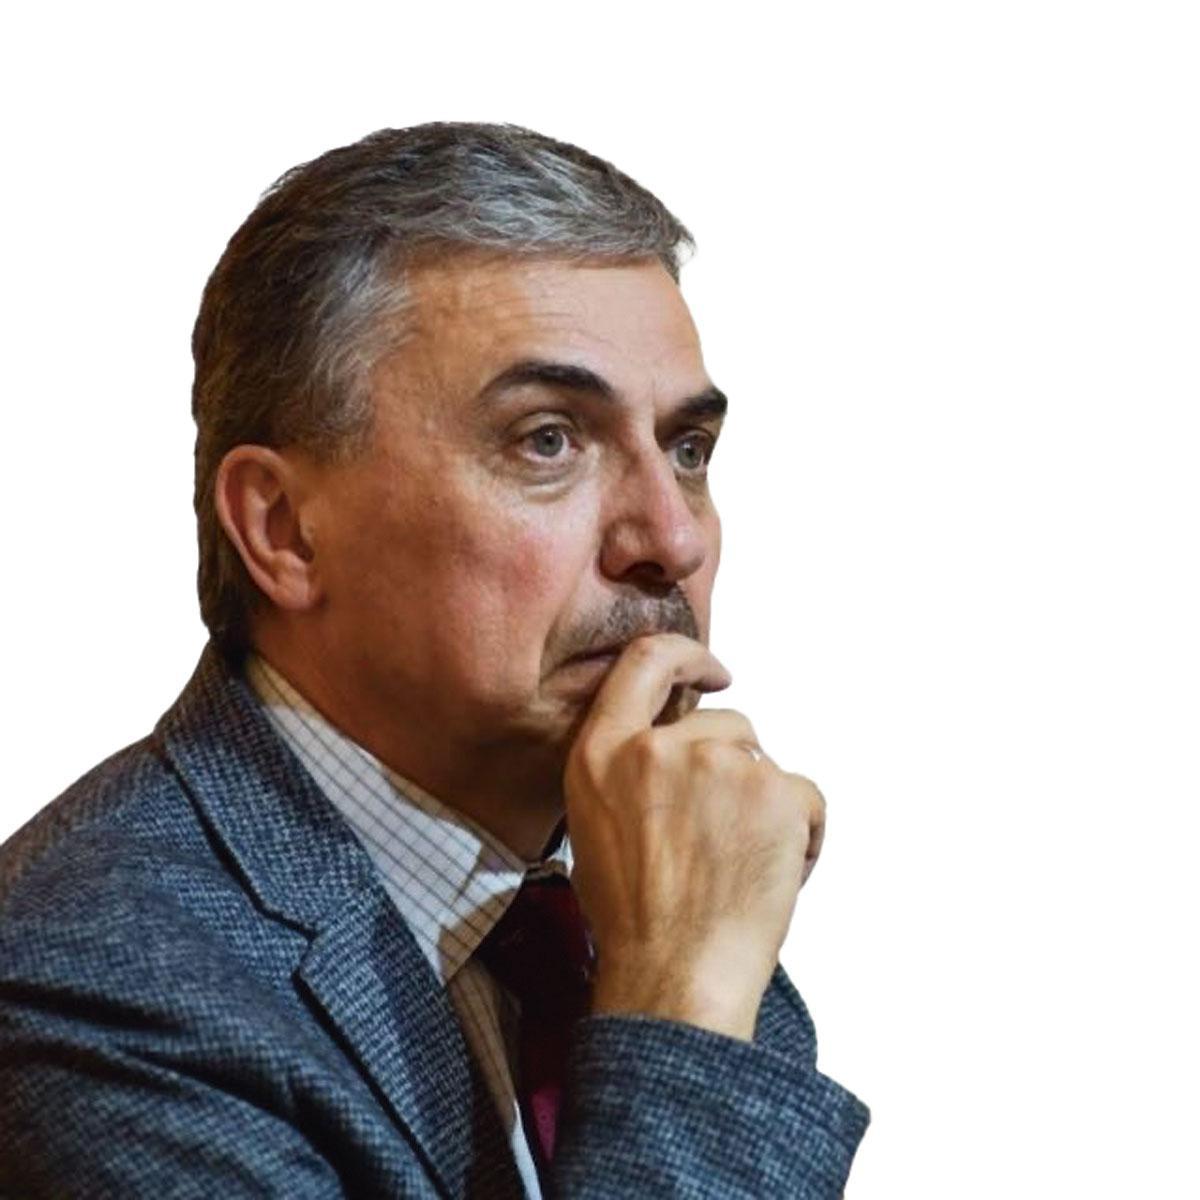 Constantin Sigov